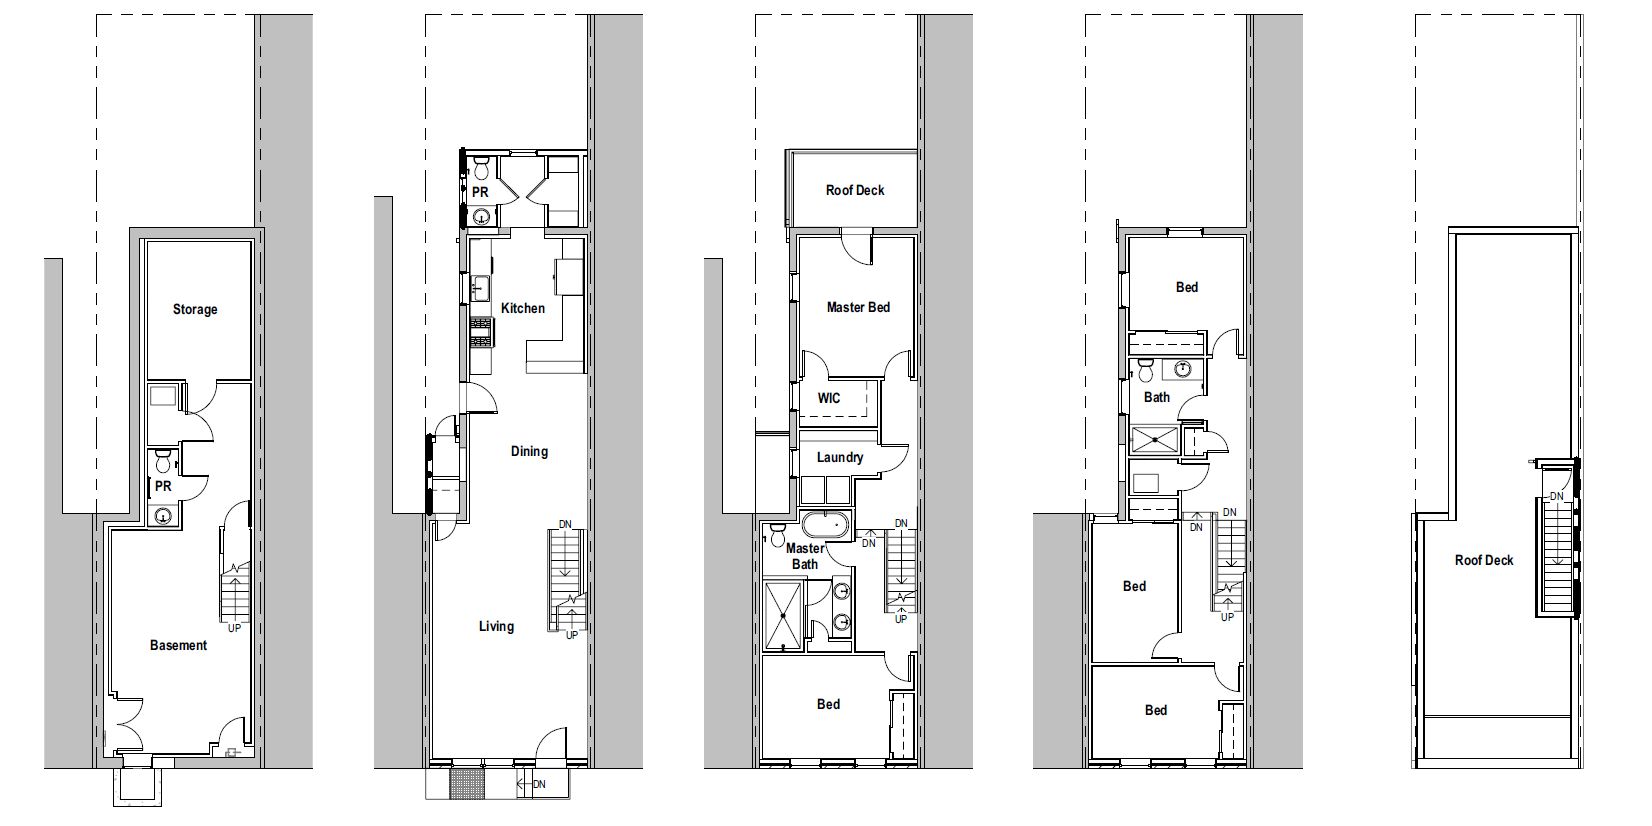 1602 South 13th Street. Floor plans. Credit: Toner Architects via the City of Philadelphia